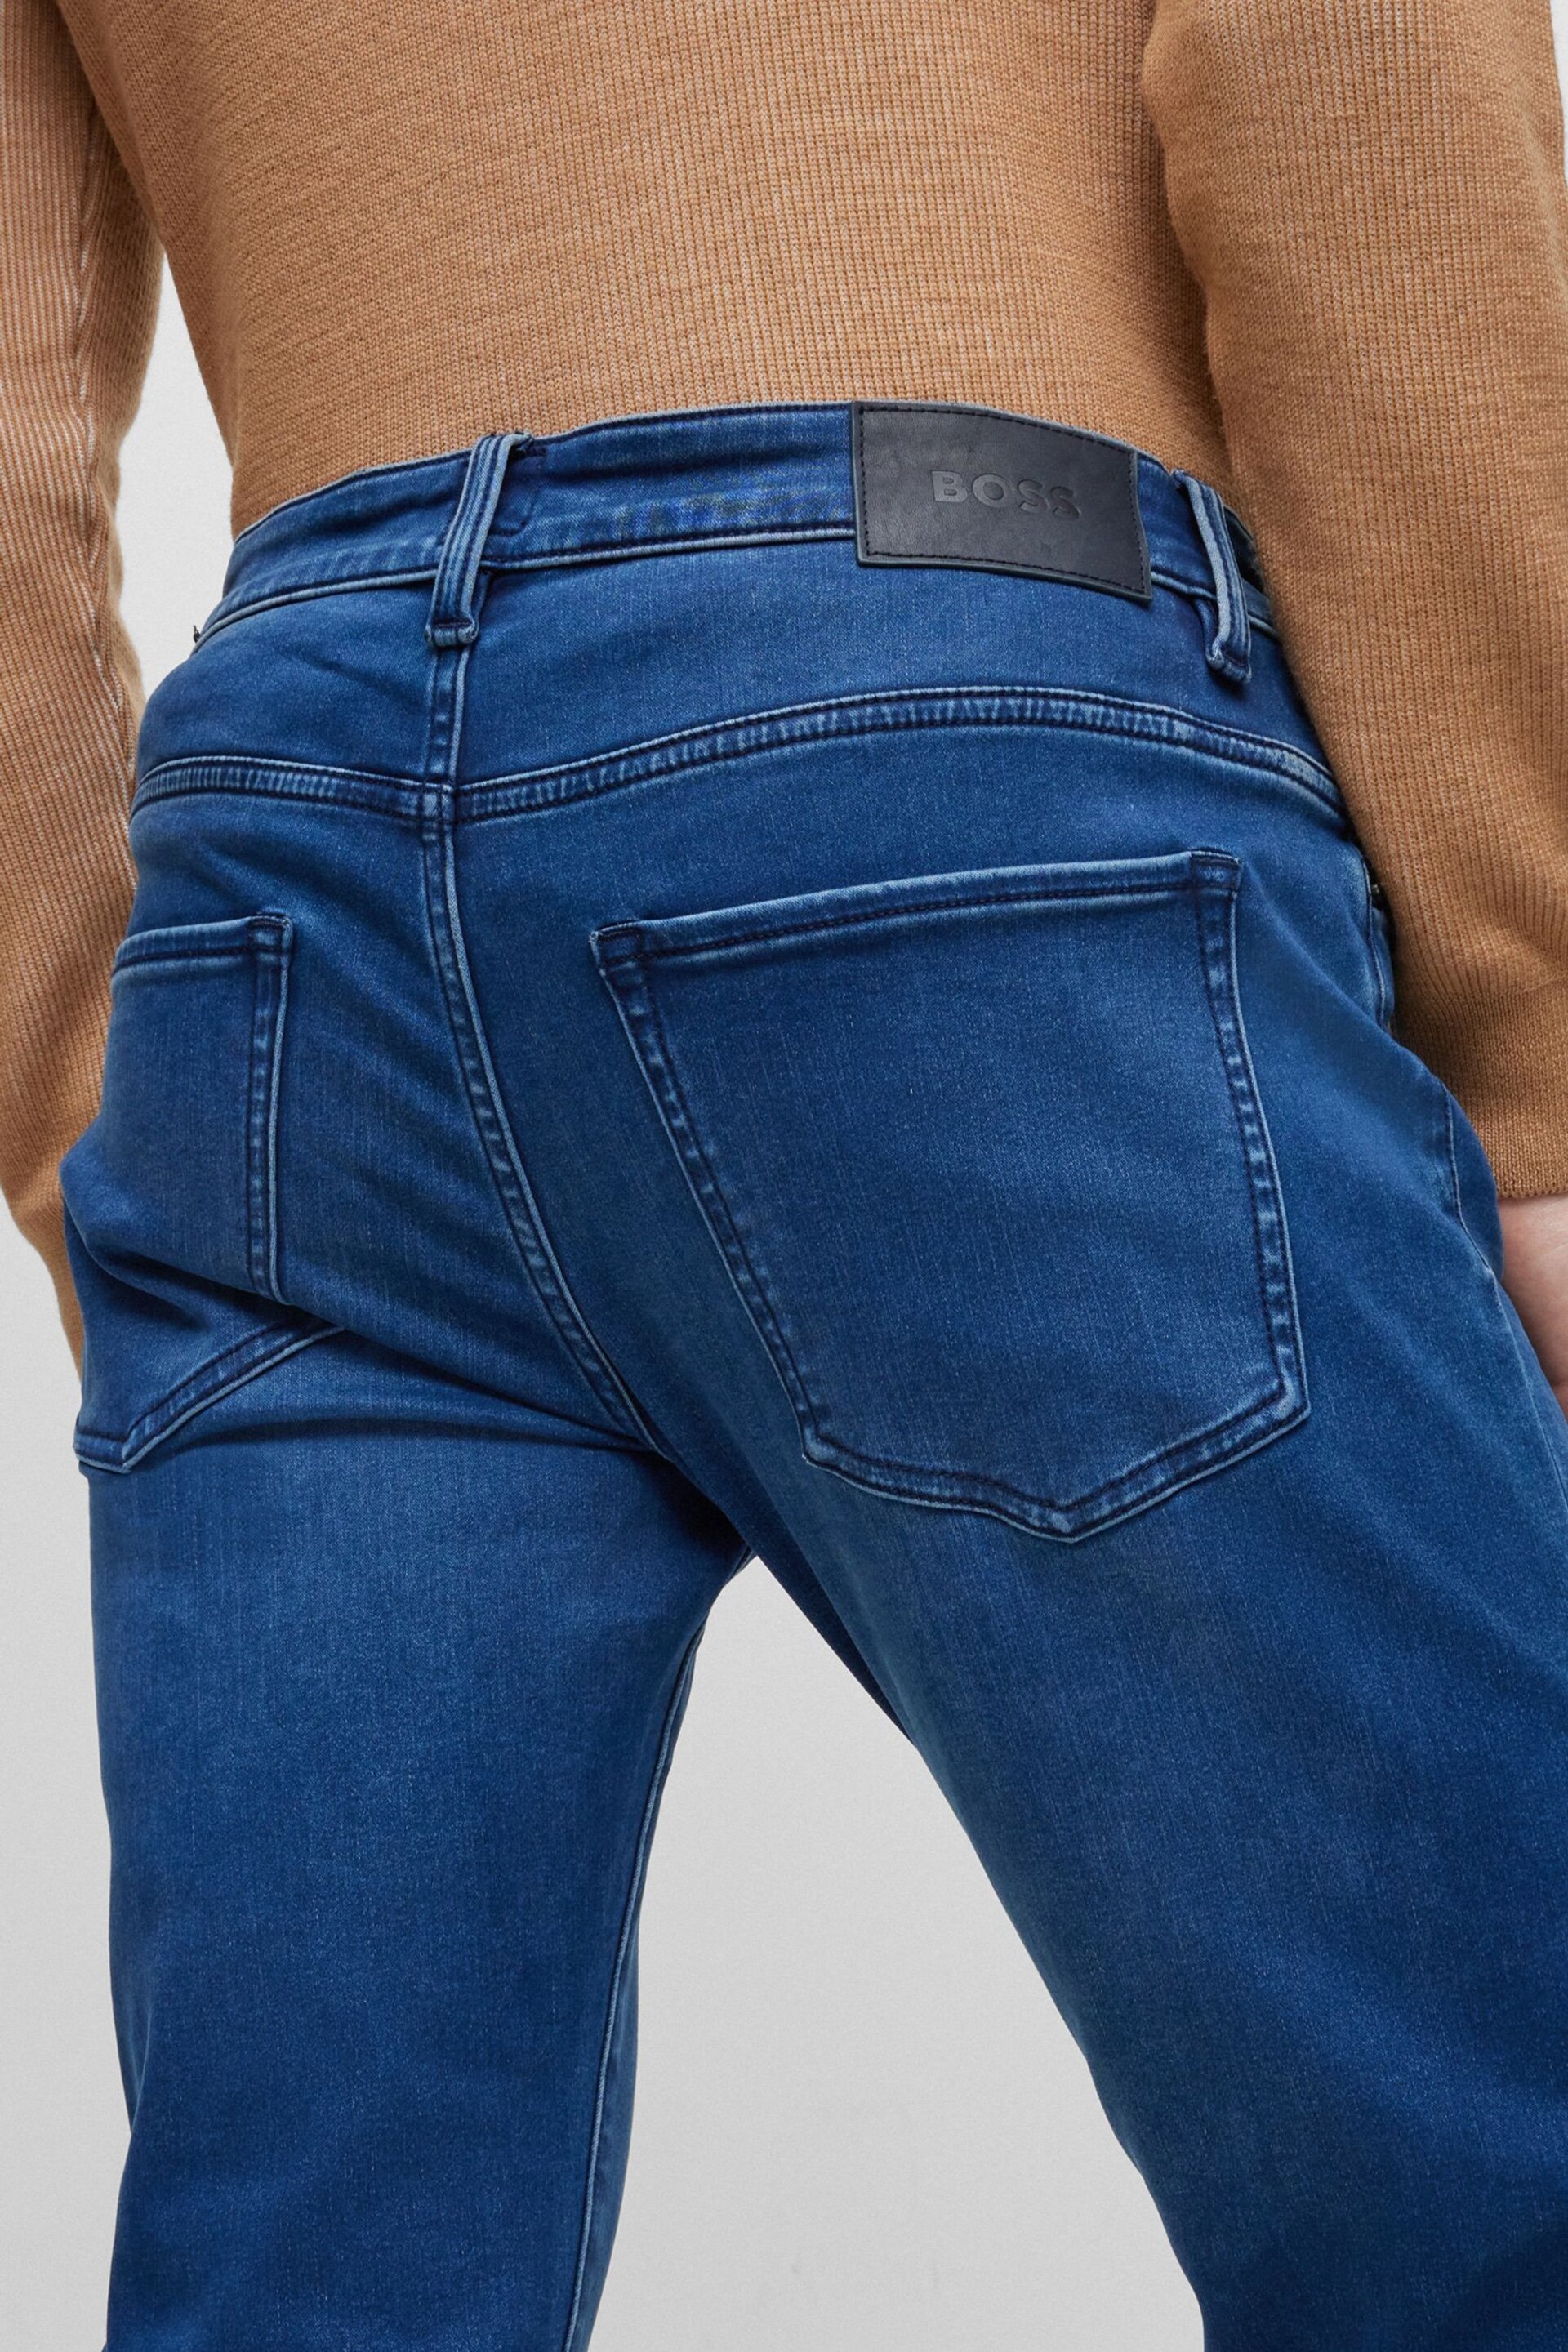 BOSS Blue Delaware Slim Fit Jeans - Image 4 of 5